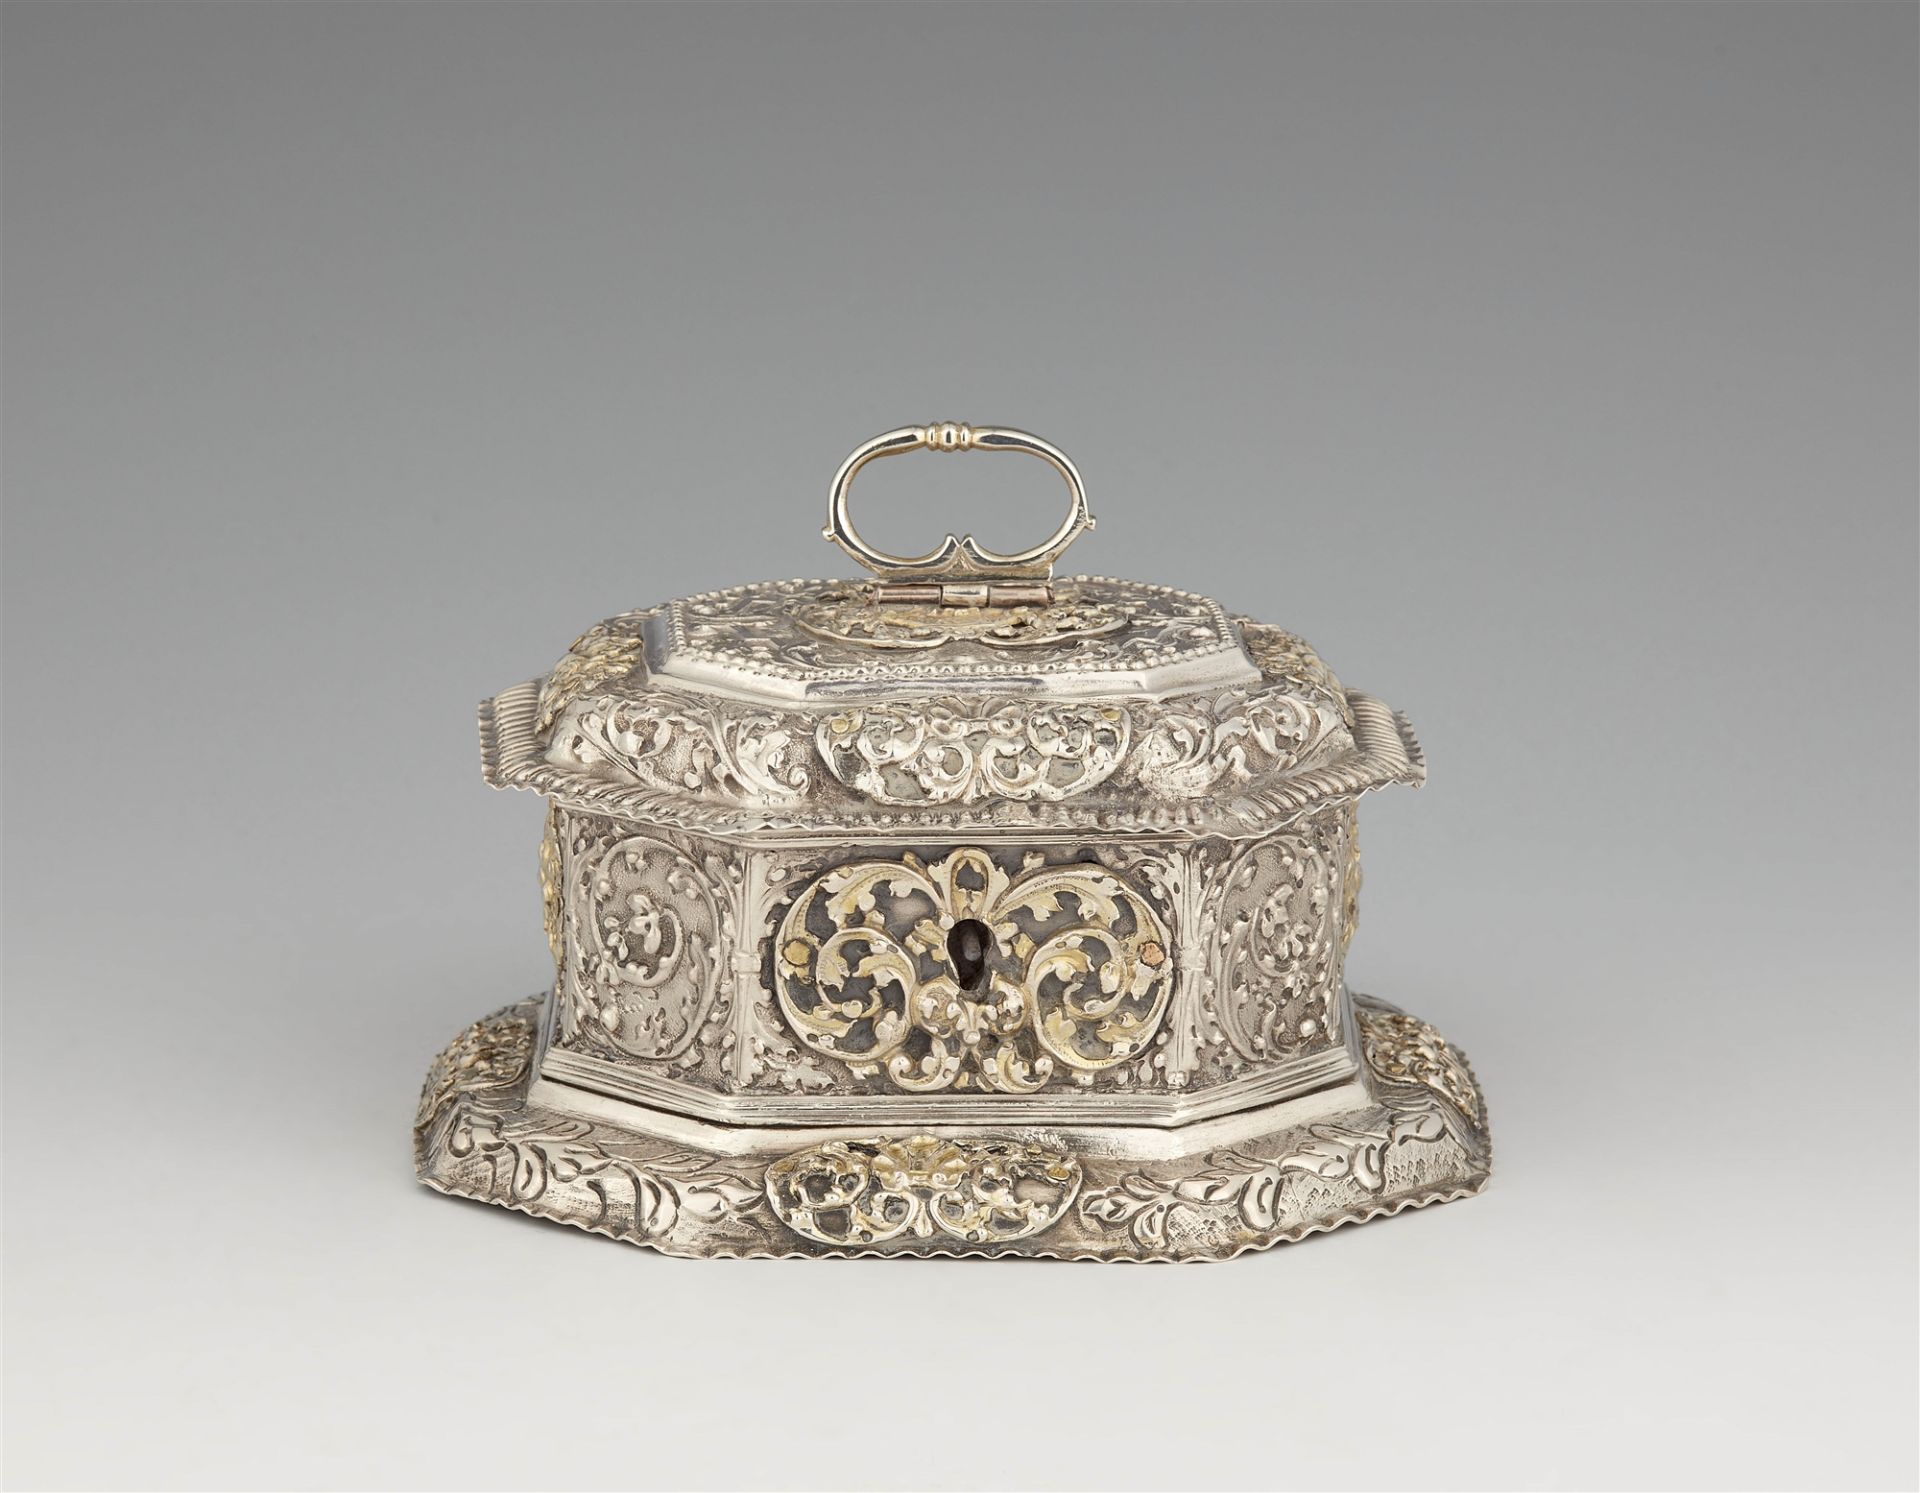 A silver gilt Augsburg Baroque casket